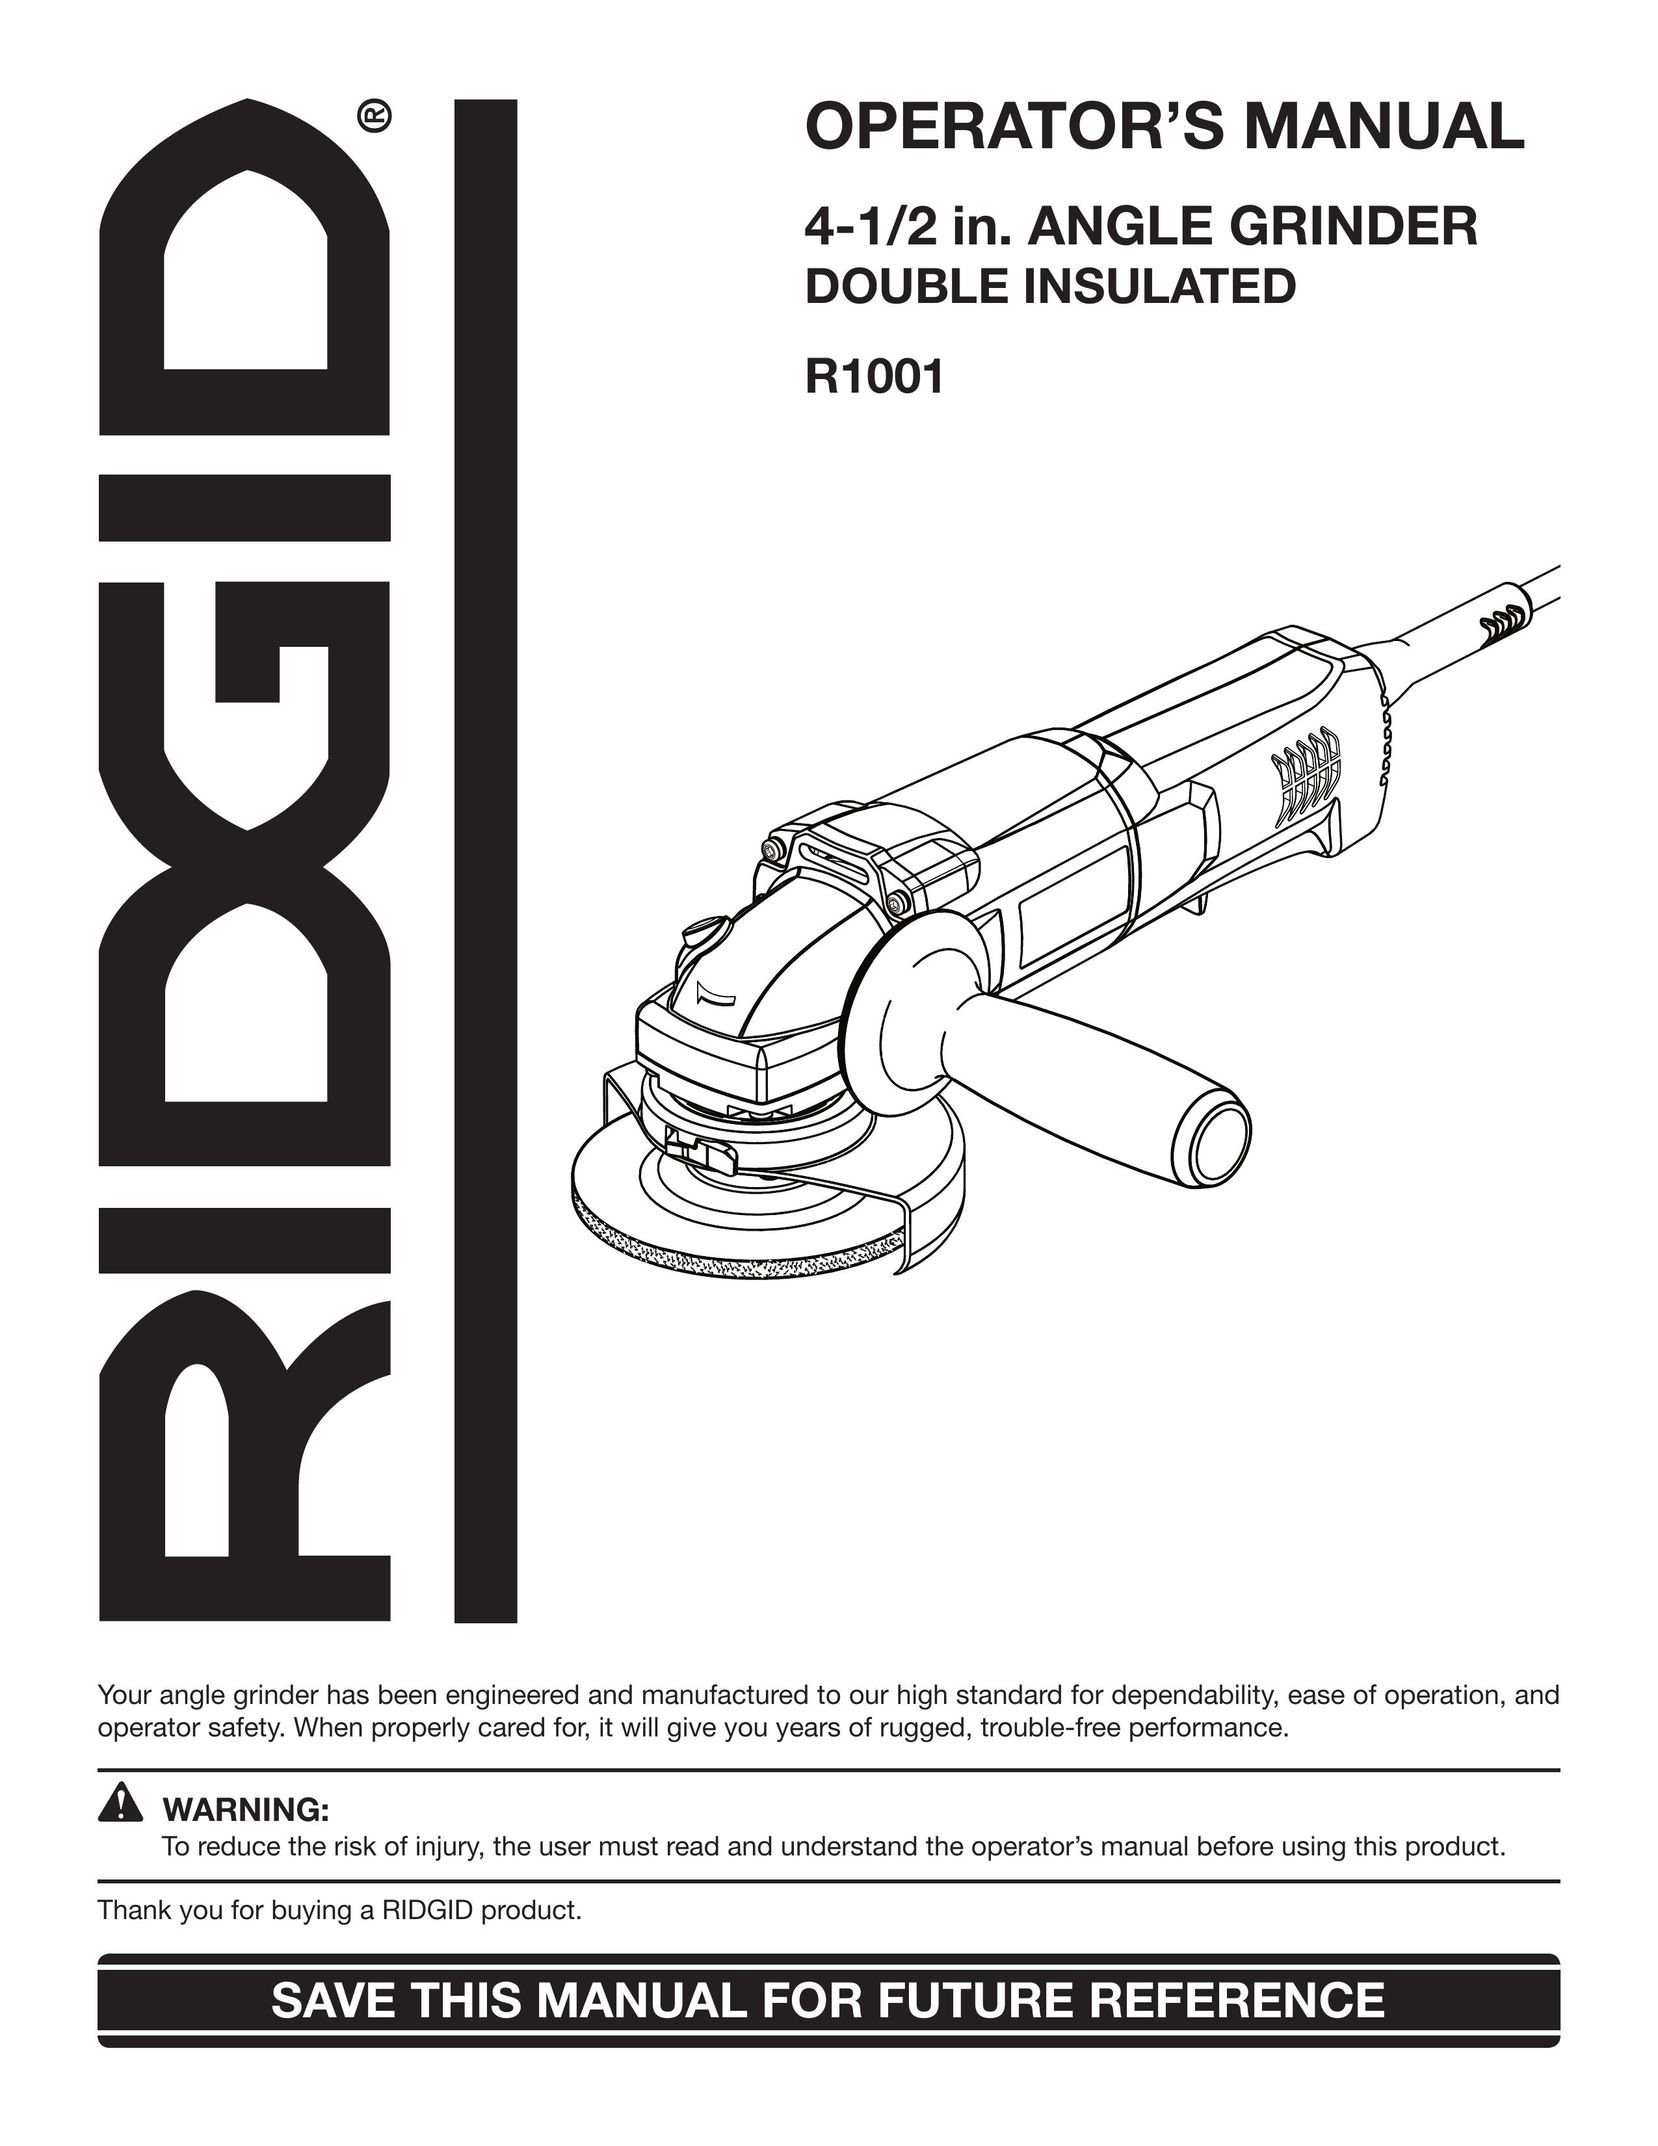 RIDGID R1001 Grinder User Manual